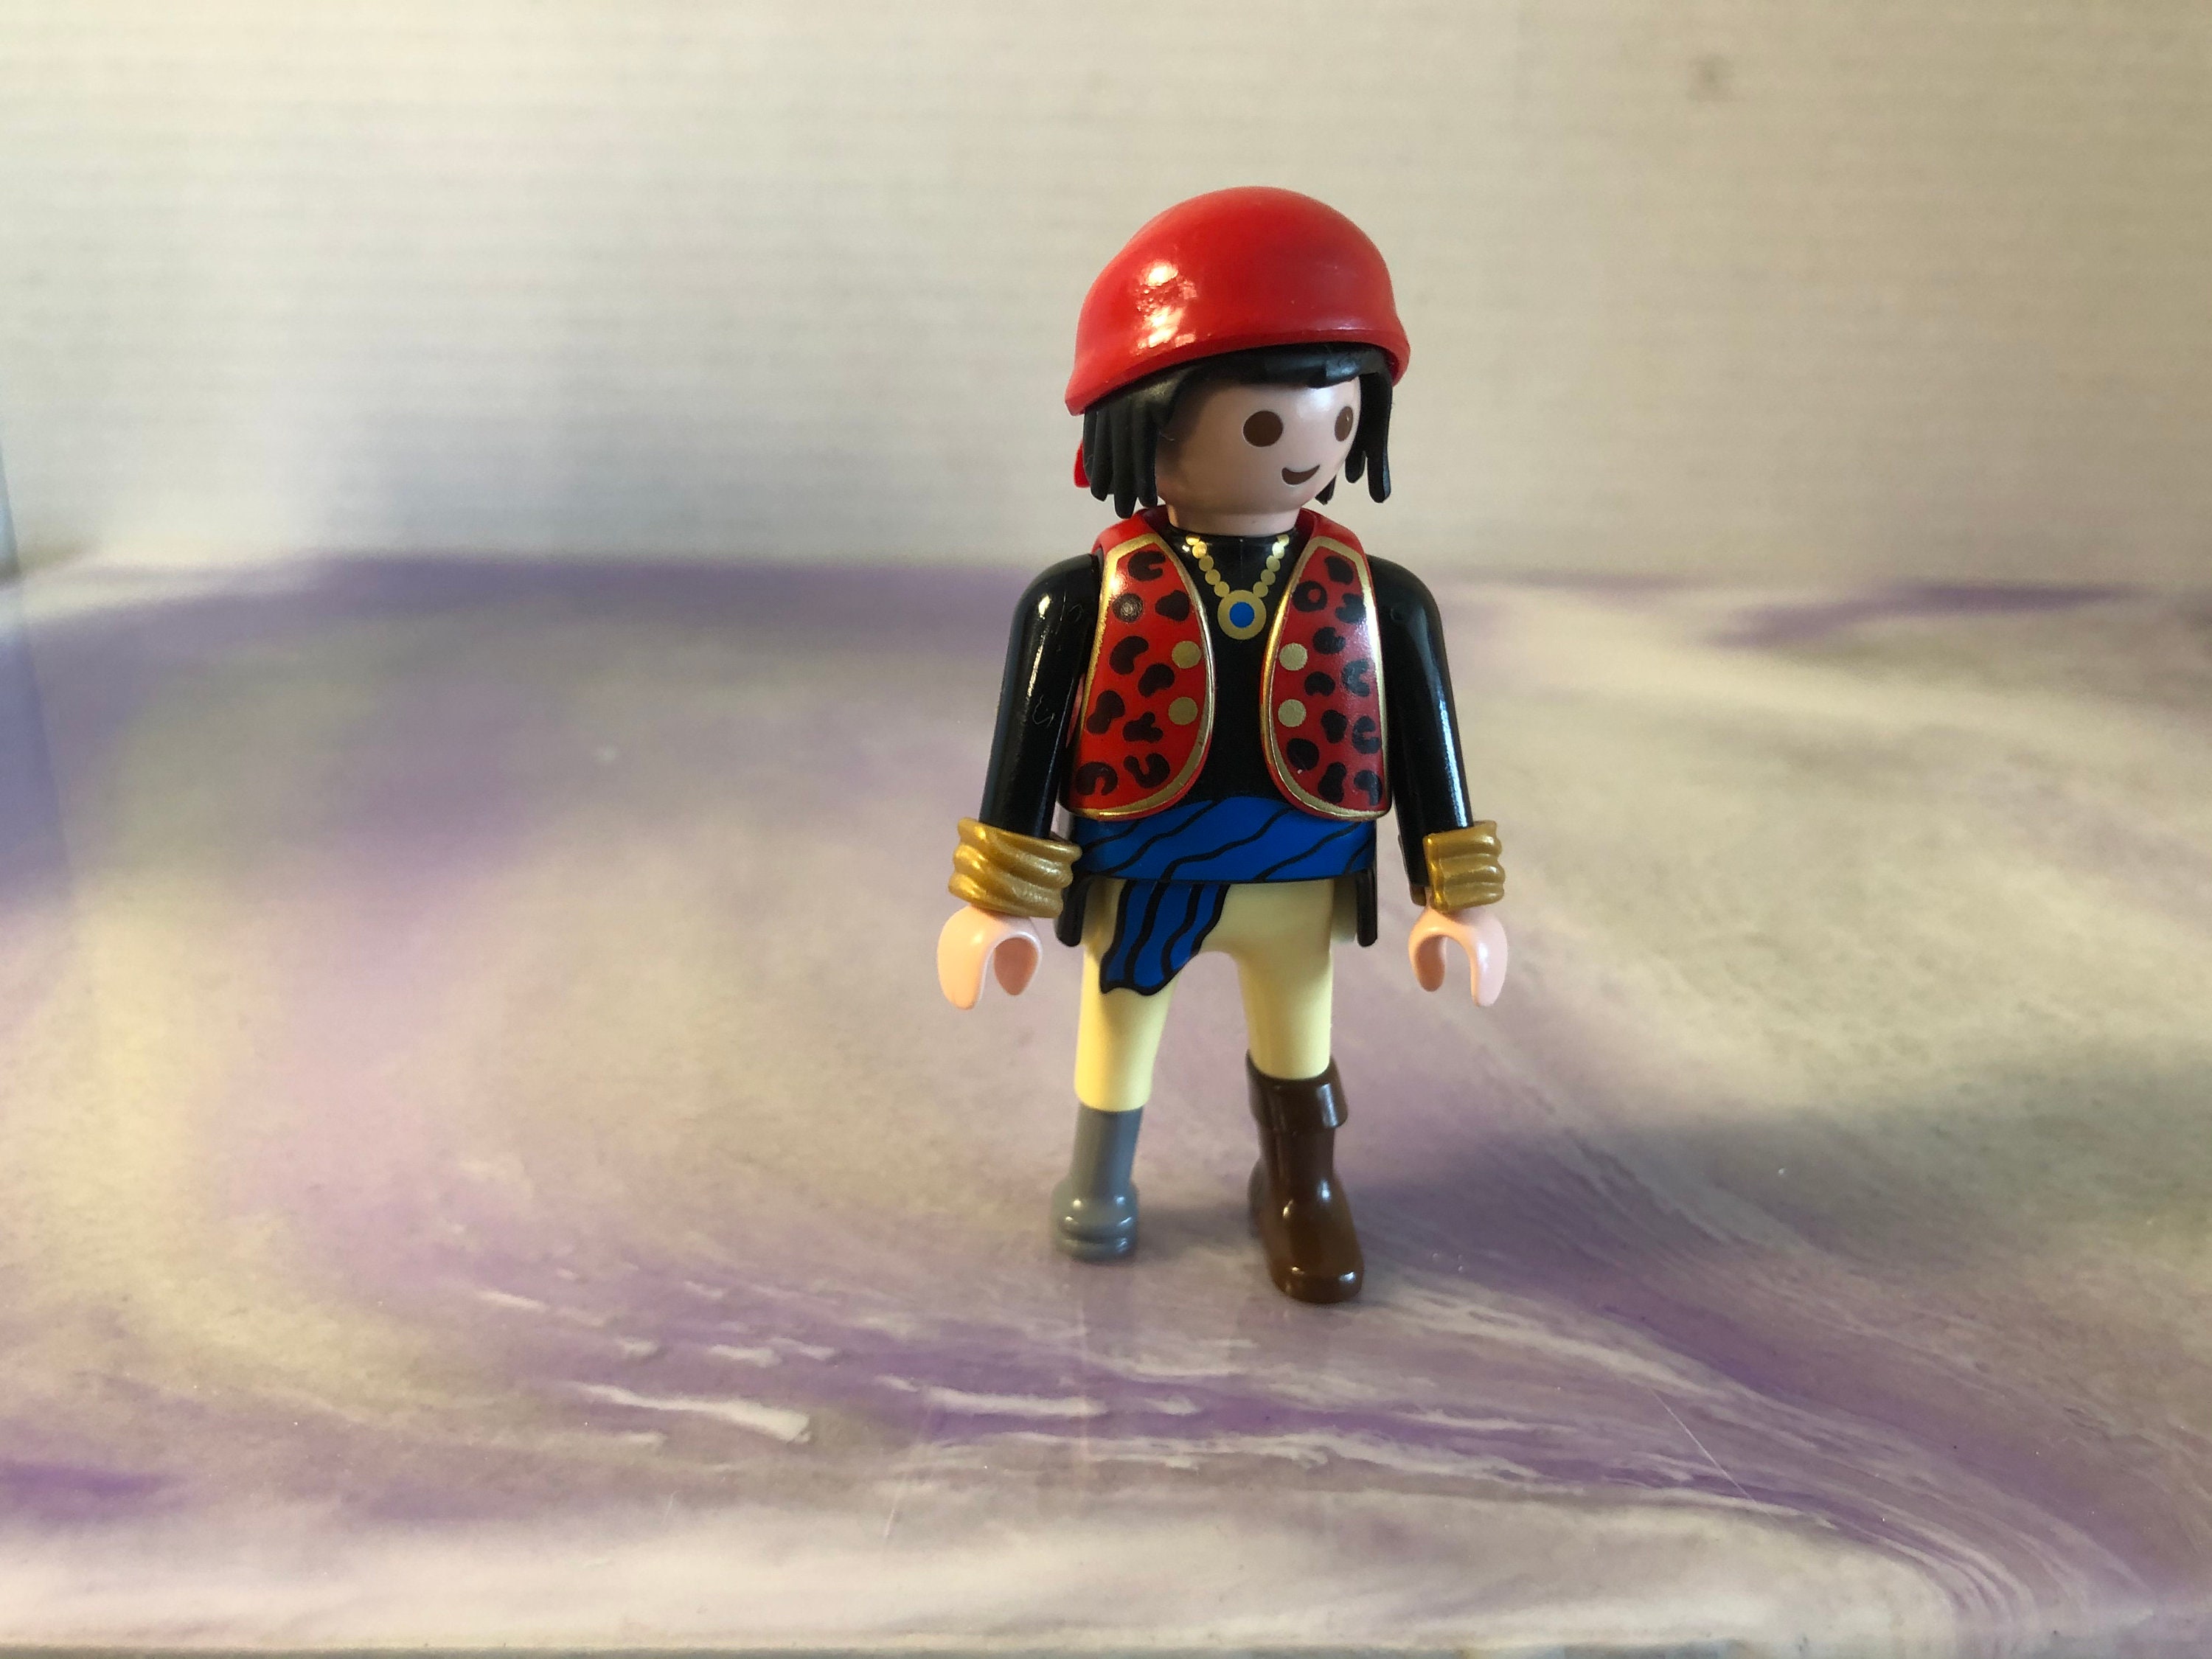 PLAYMOBIL XXL Pirate Figure : : Toys